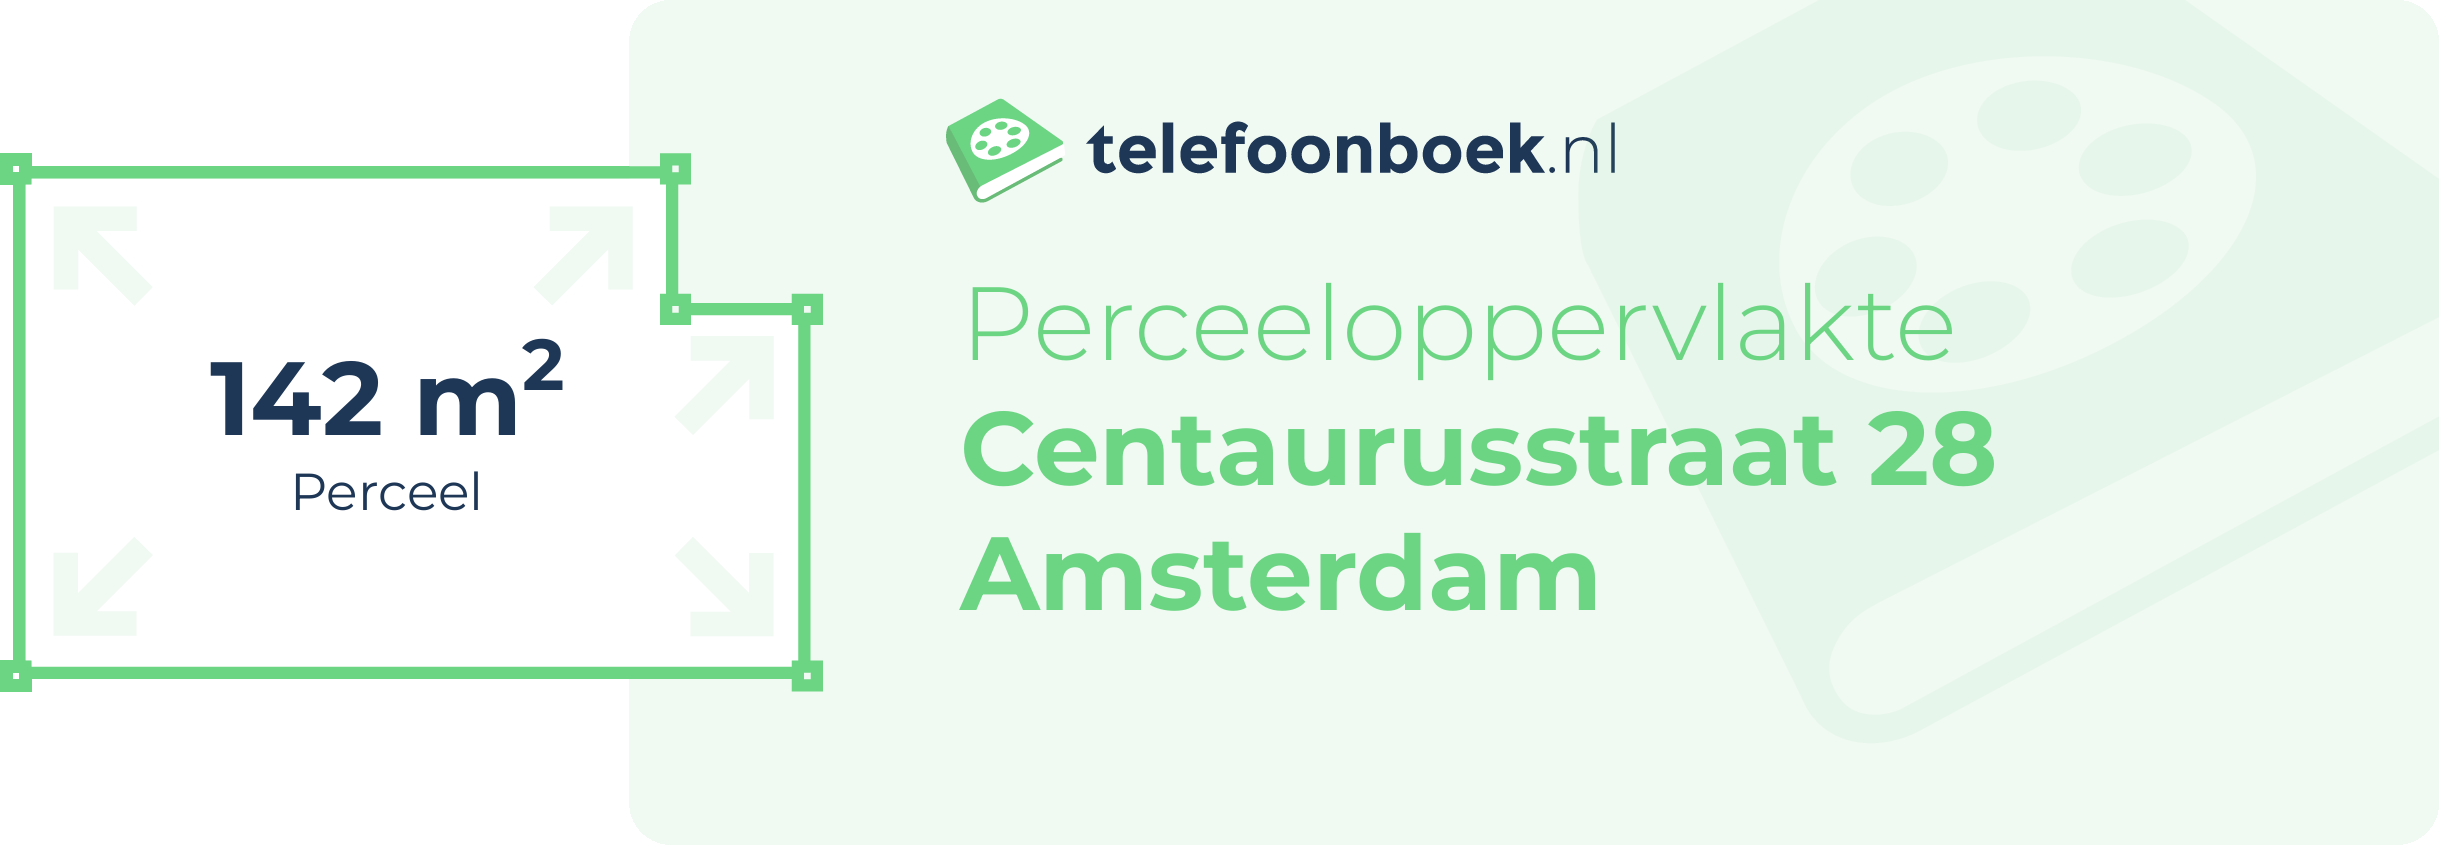 Perceeloppervlakte Centaurusstraat 28 Amsterdam